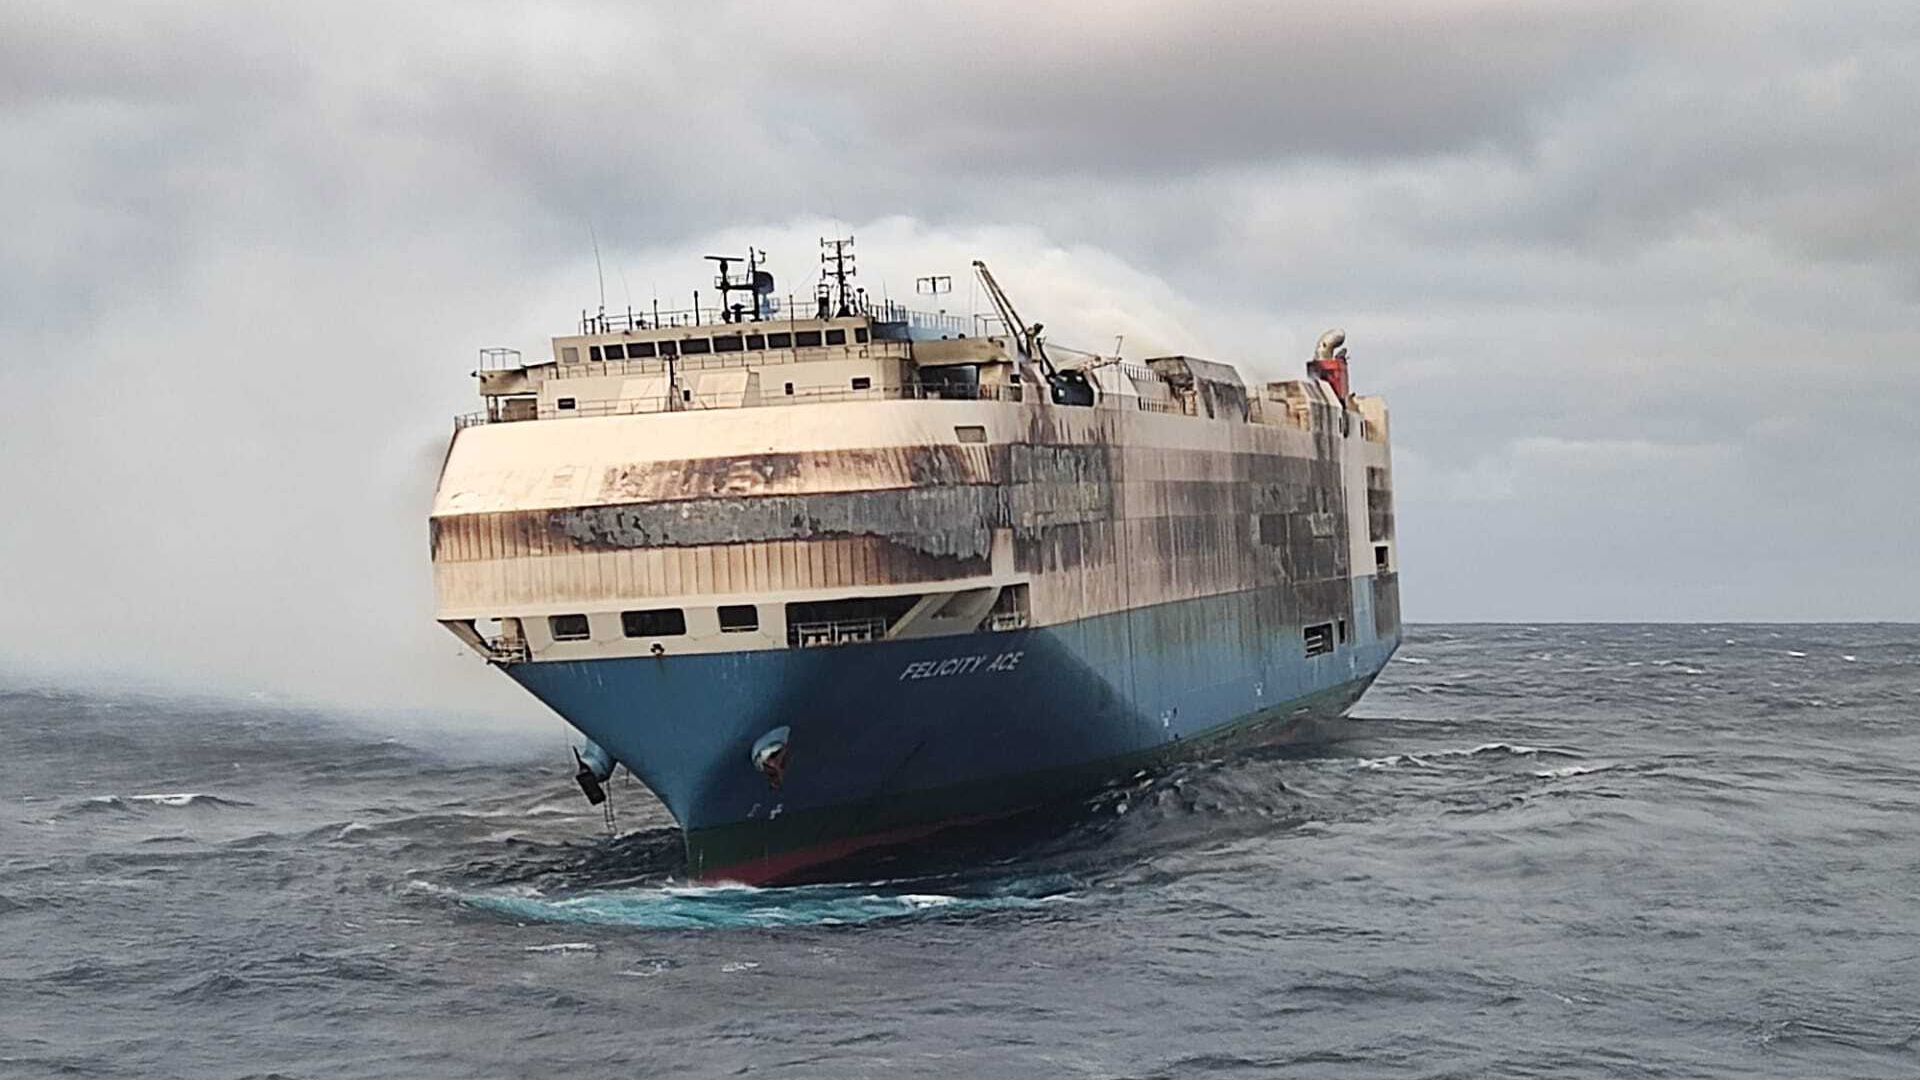 The Felicity Ace adrift in the Atlantic Ocean on Feb. 18.